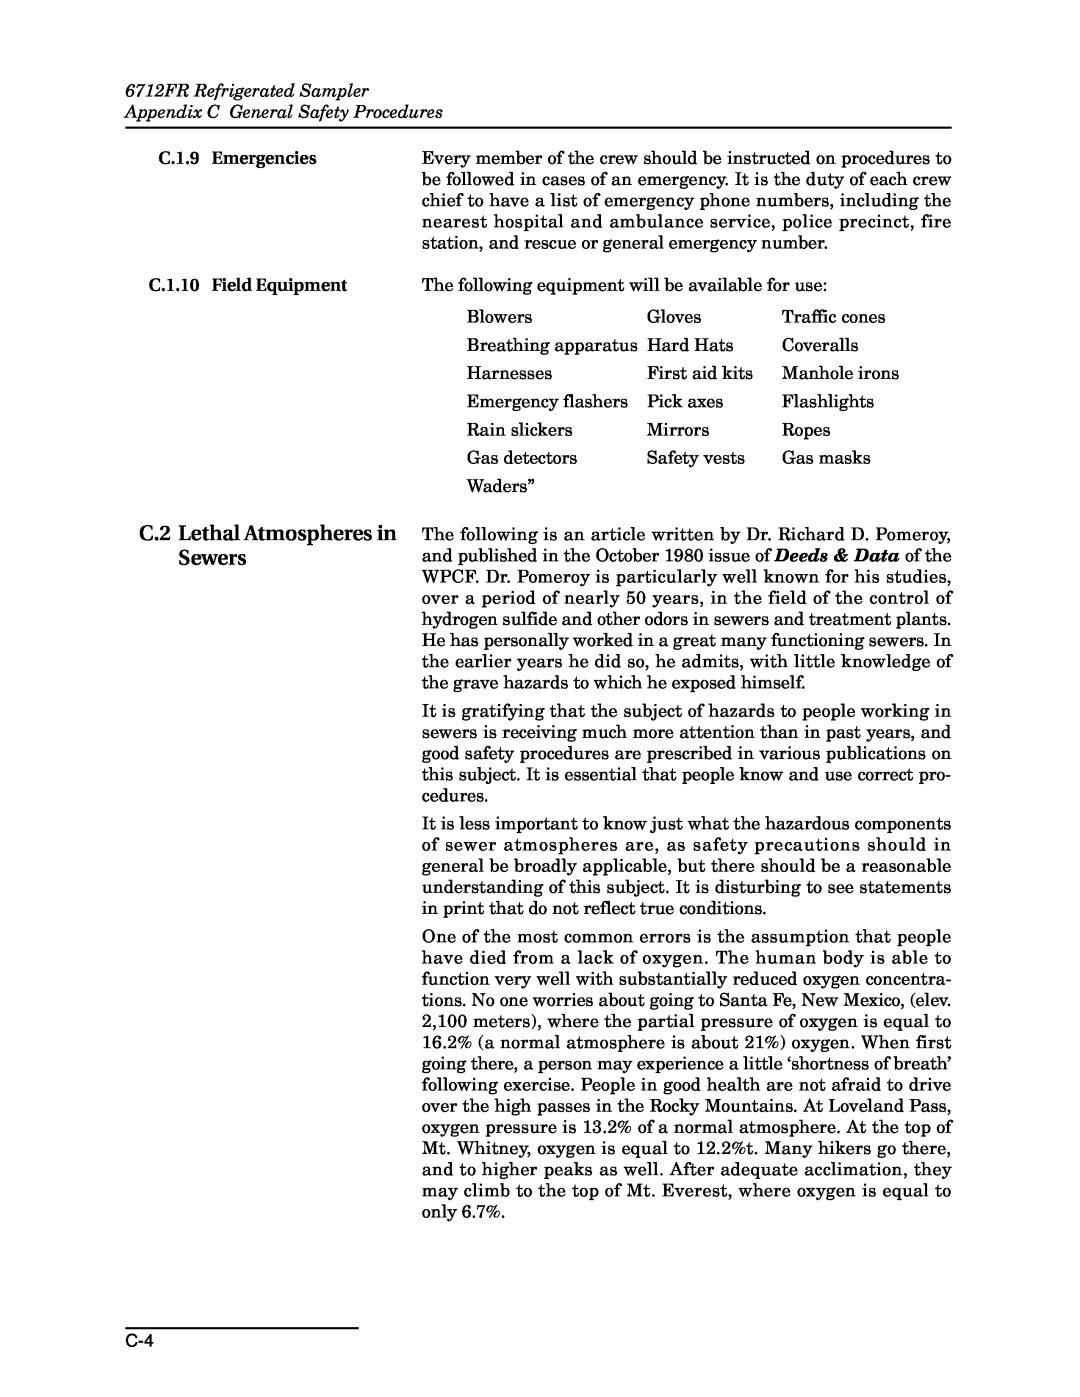 Teledyne C.2 Lethal Atmospheres in Sewers, 6712FR Refrigerated Sampler Appendix C General Safety Procedures, C.1.9 